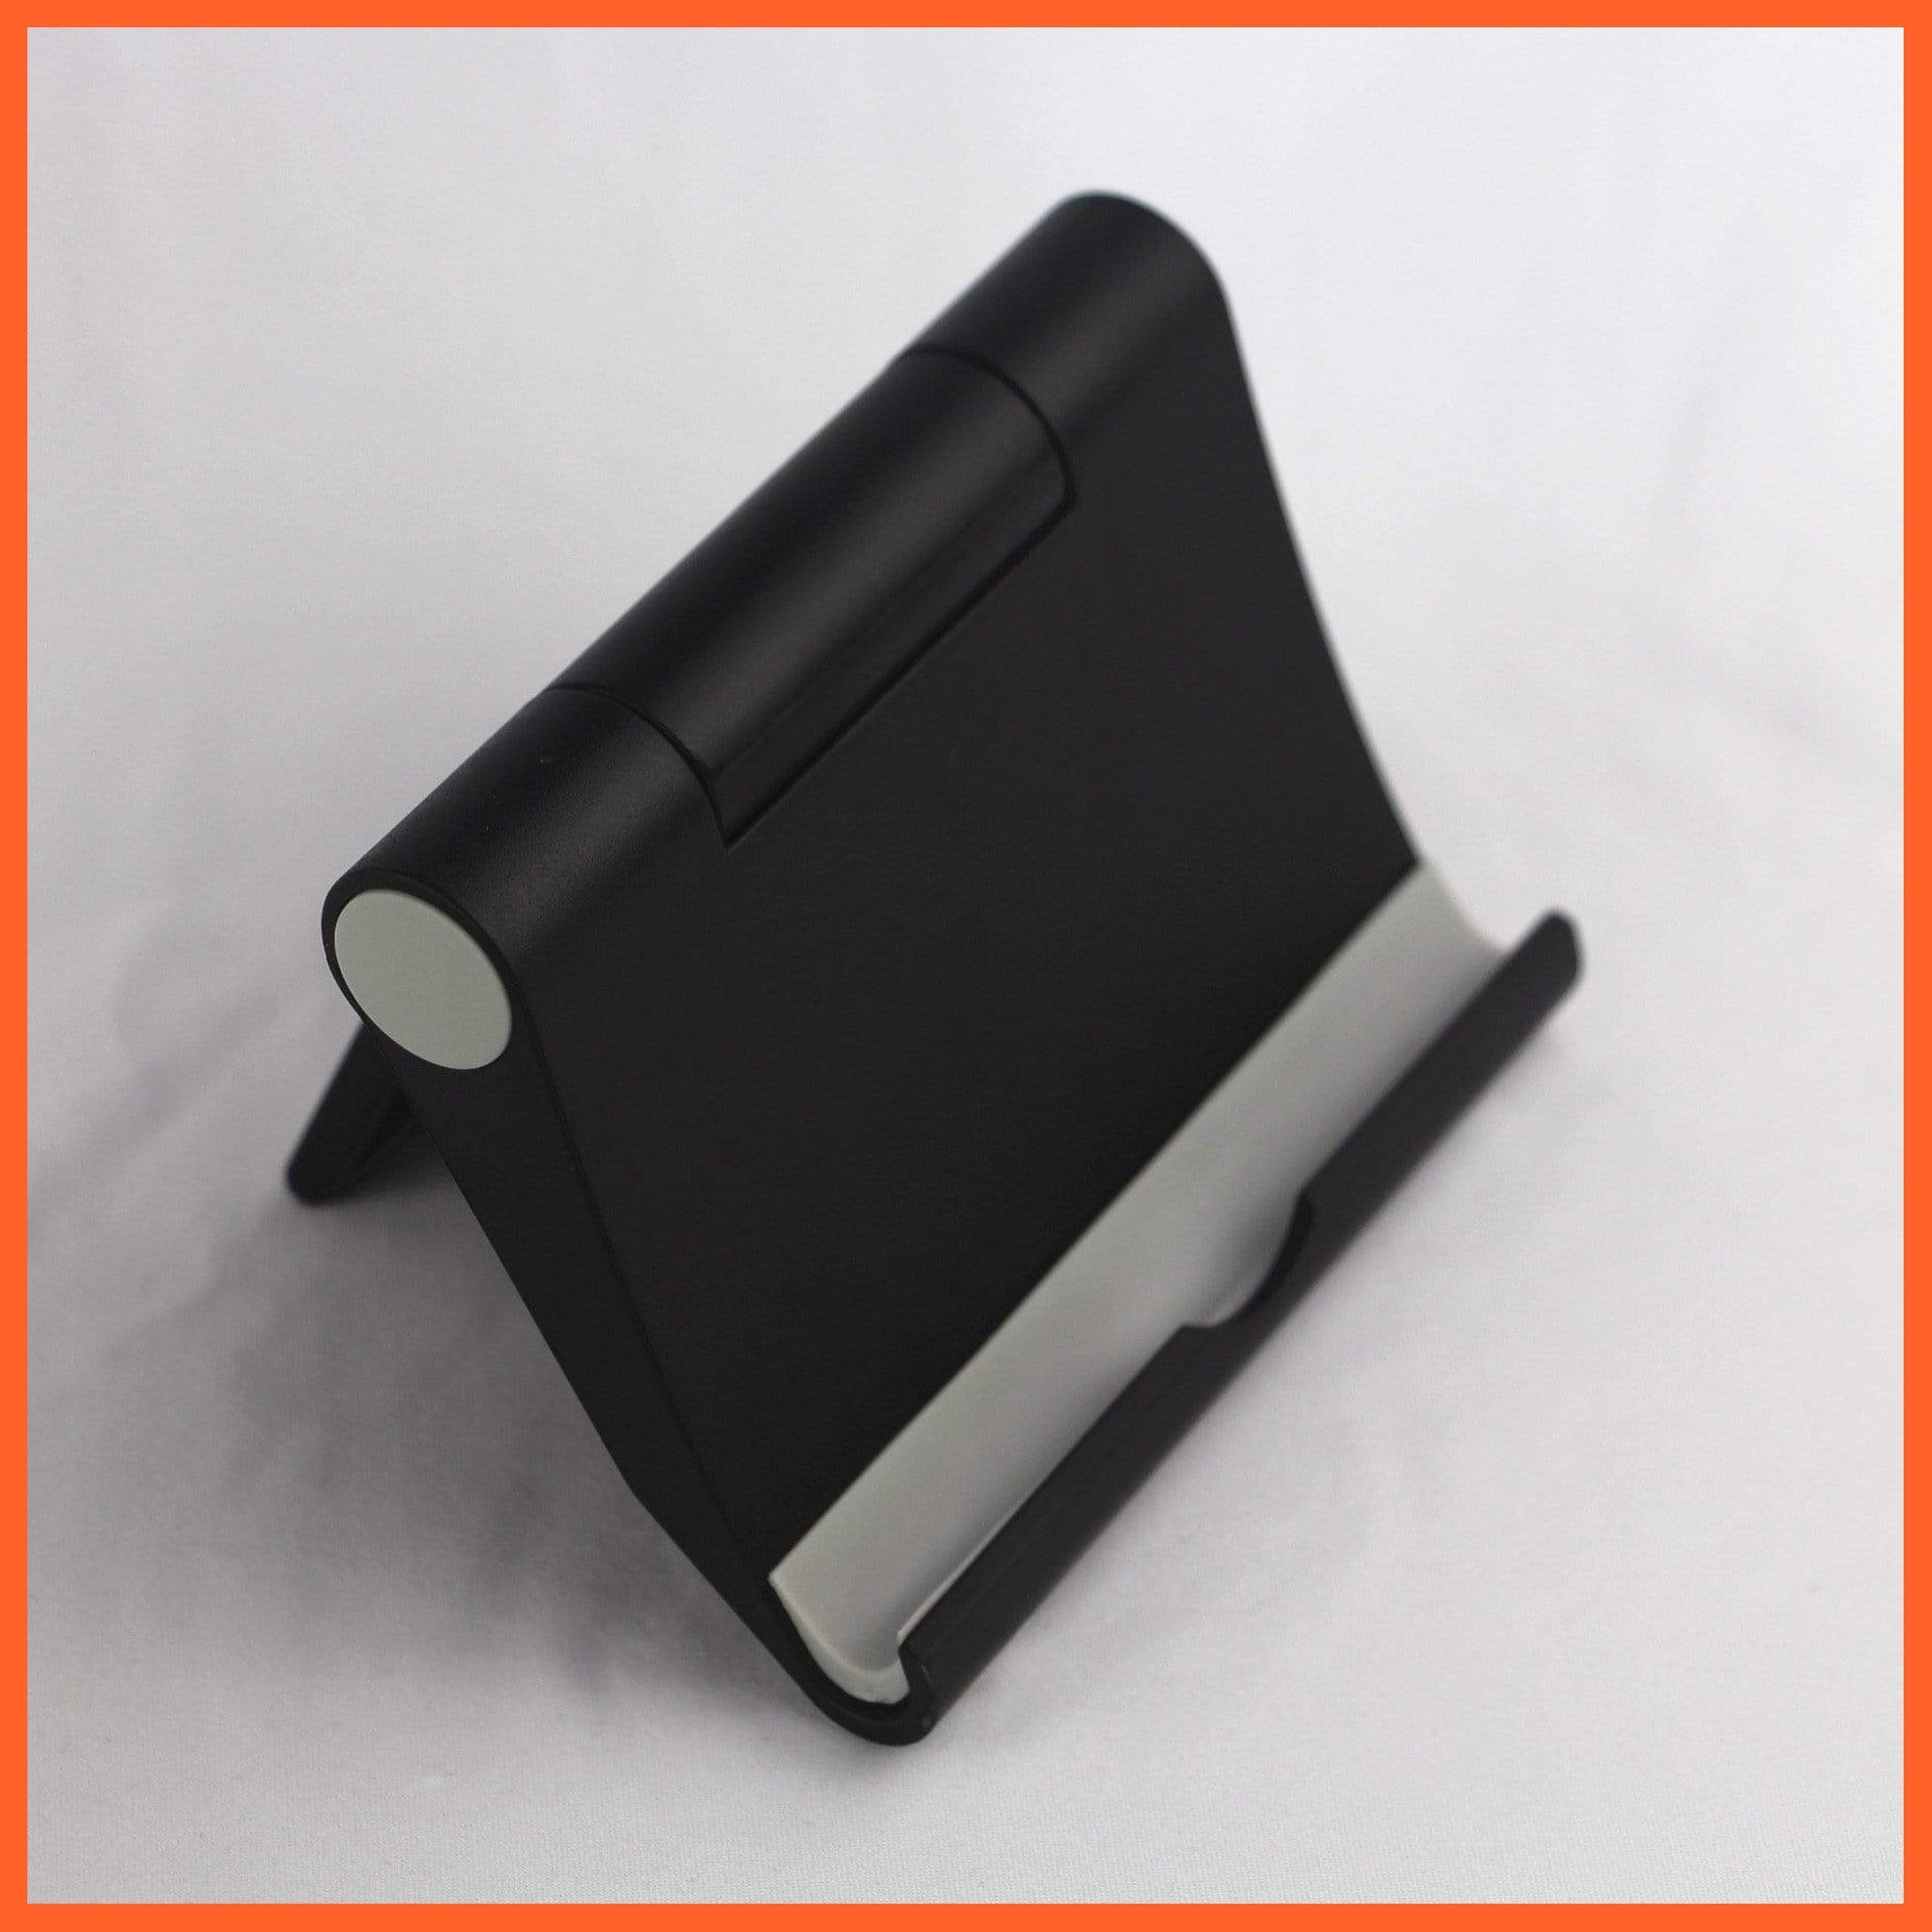 Anti-Slip Foldable Phone Holder | whatagift.com.au.